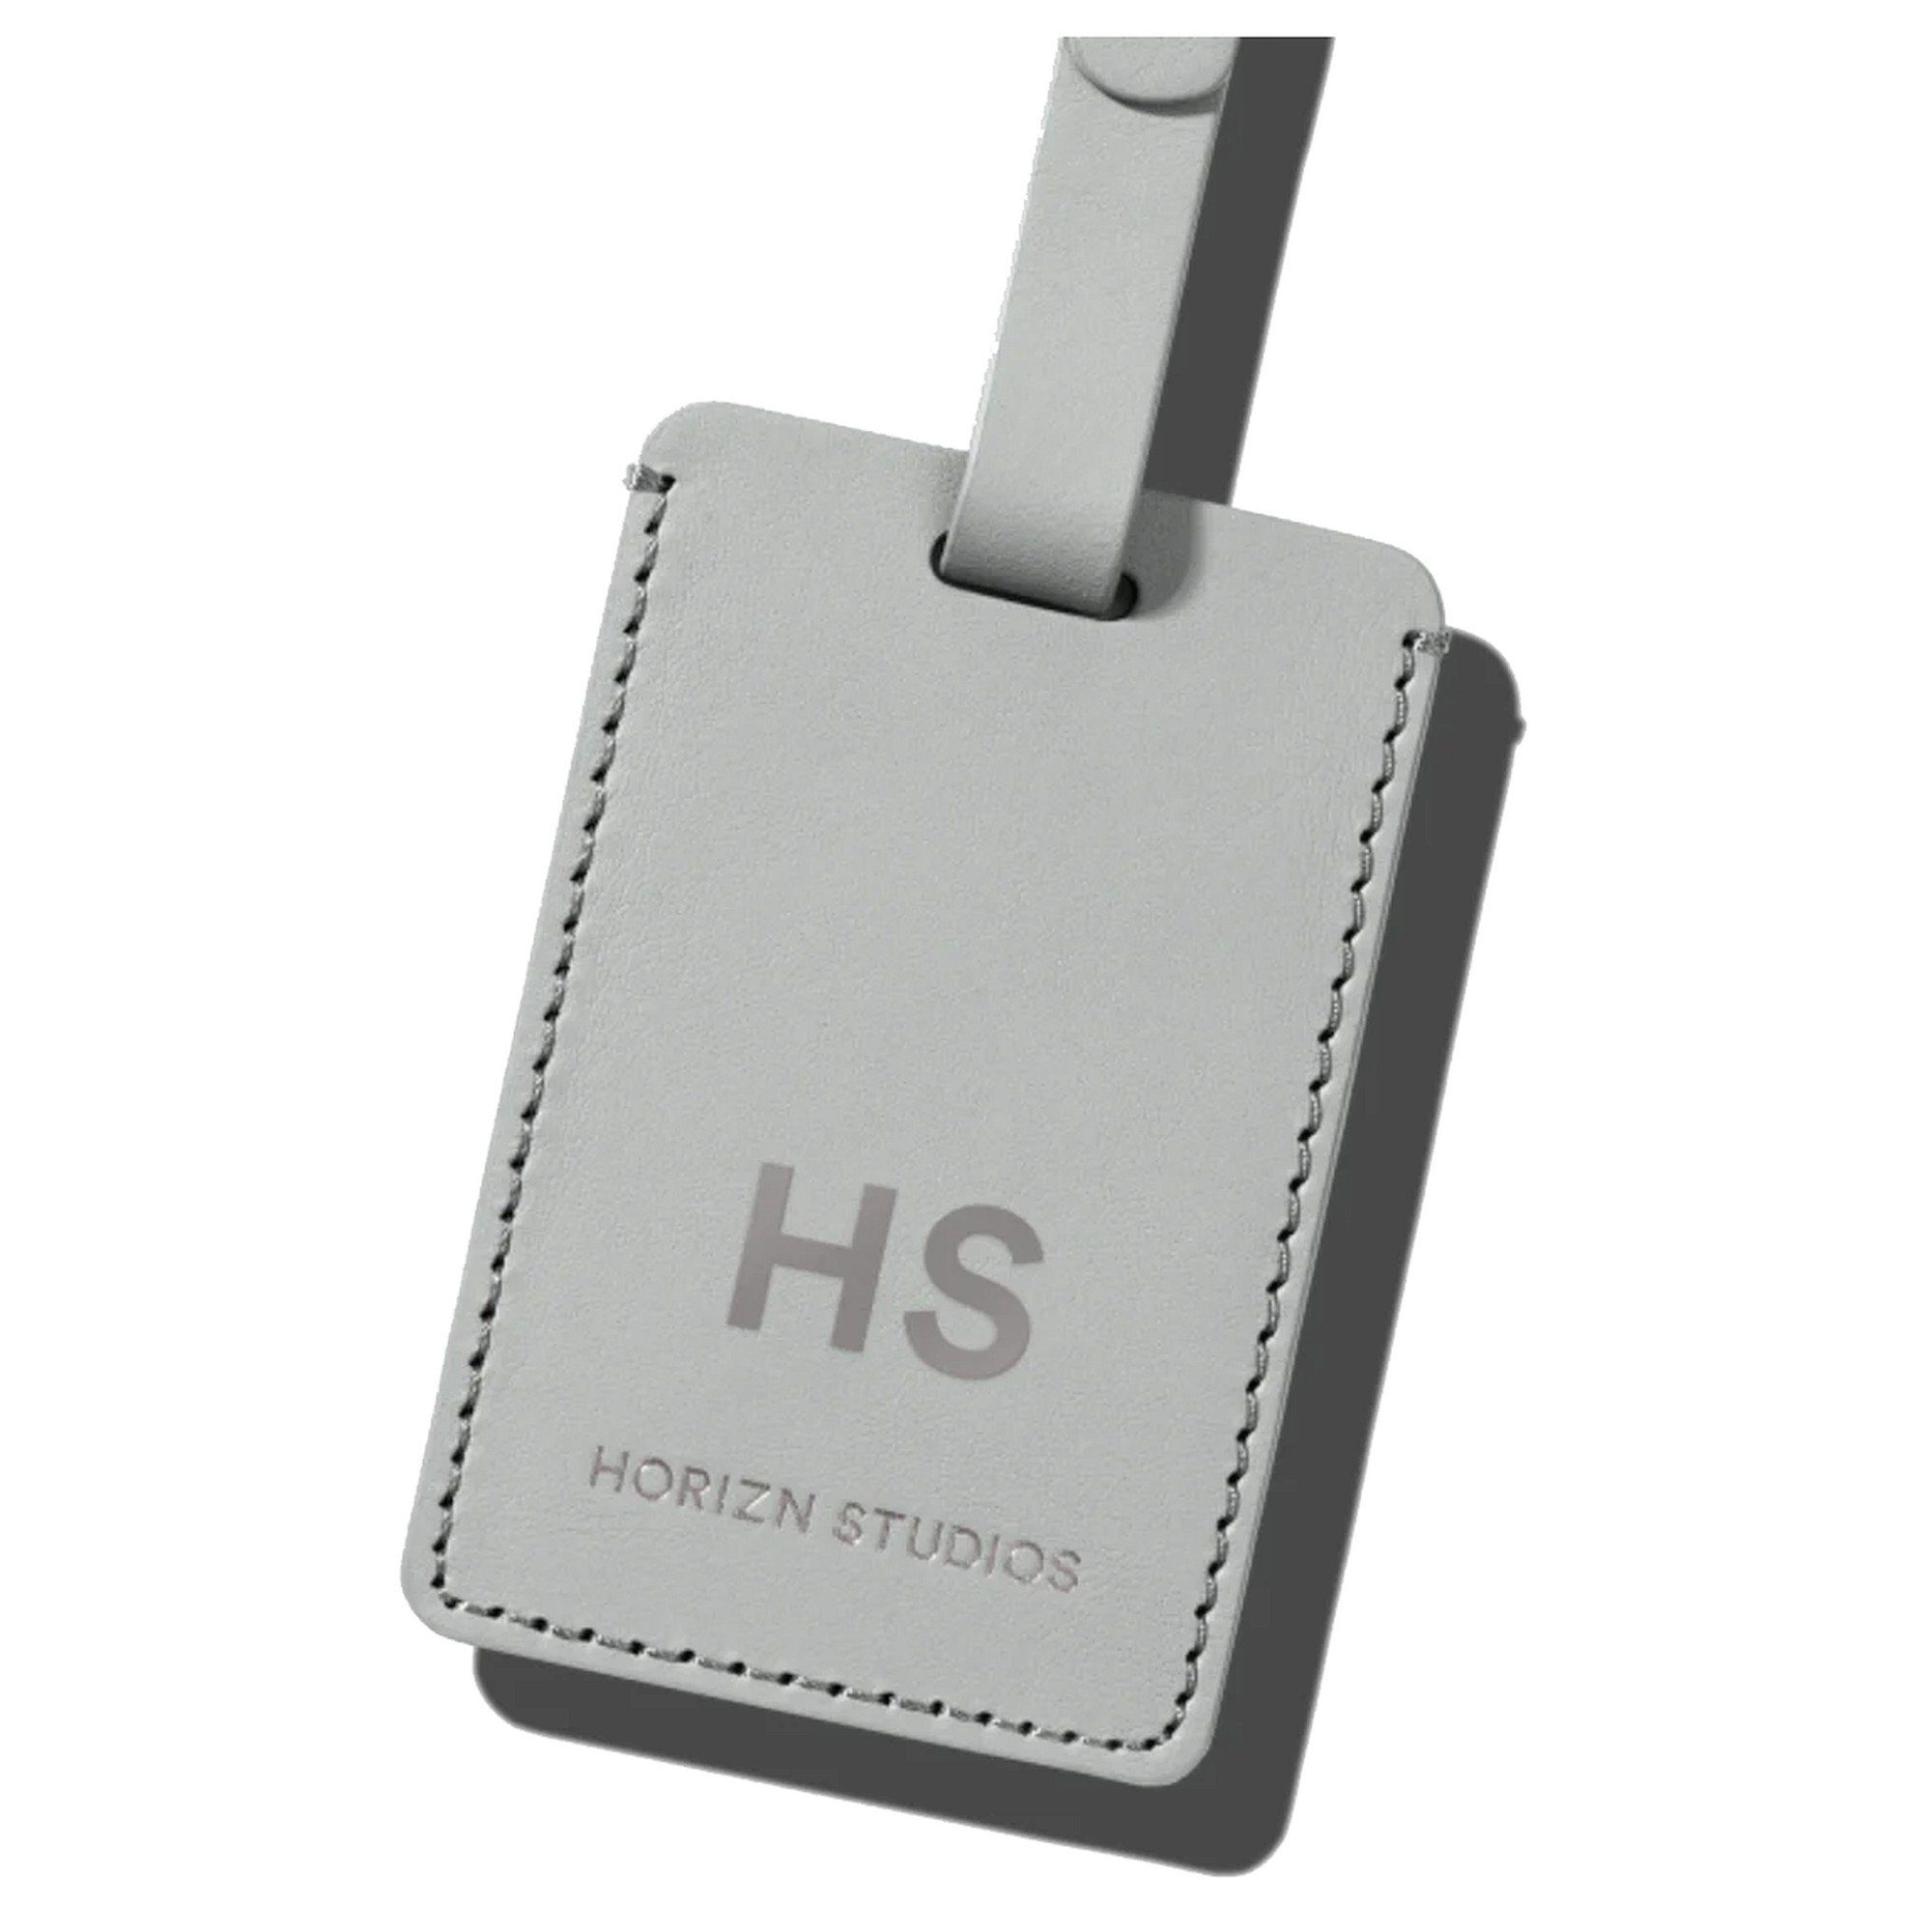 Horizn Studios 55 4 - cm, H5 light grey S quartz 4-Rollen-Kabinentrolley Trolley Rollen Essential